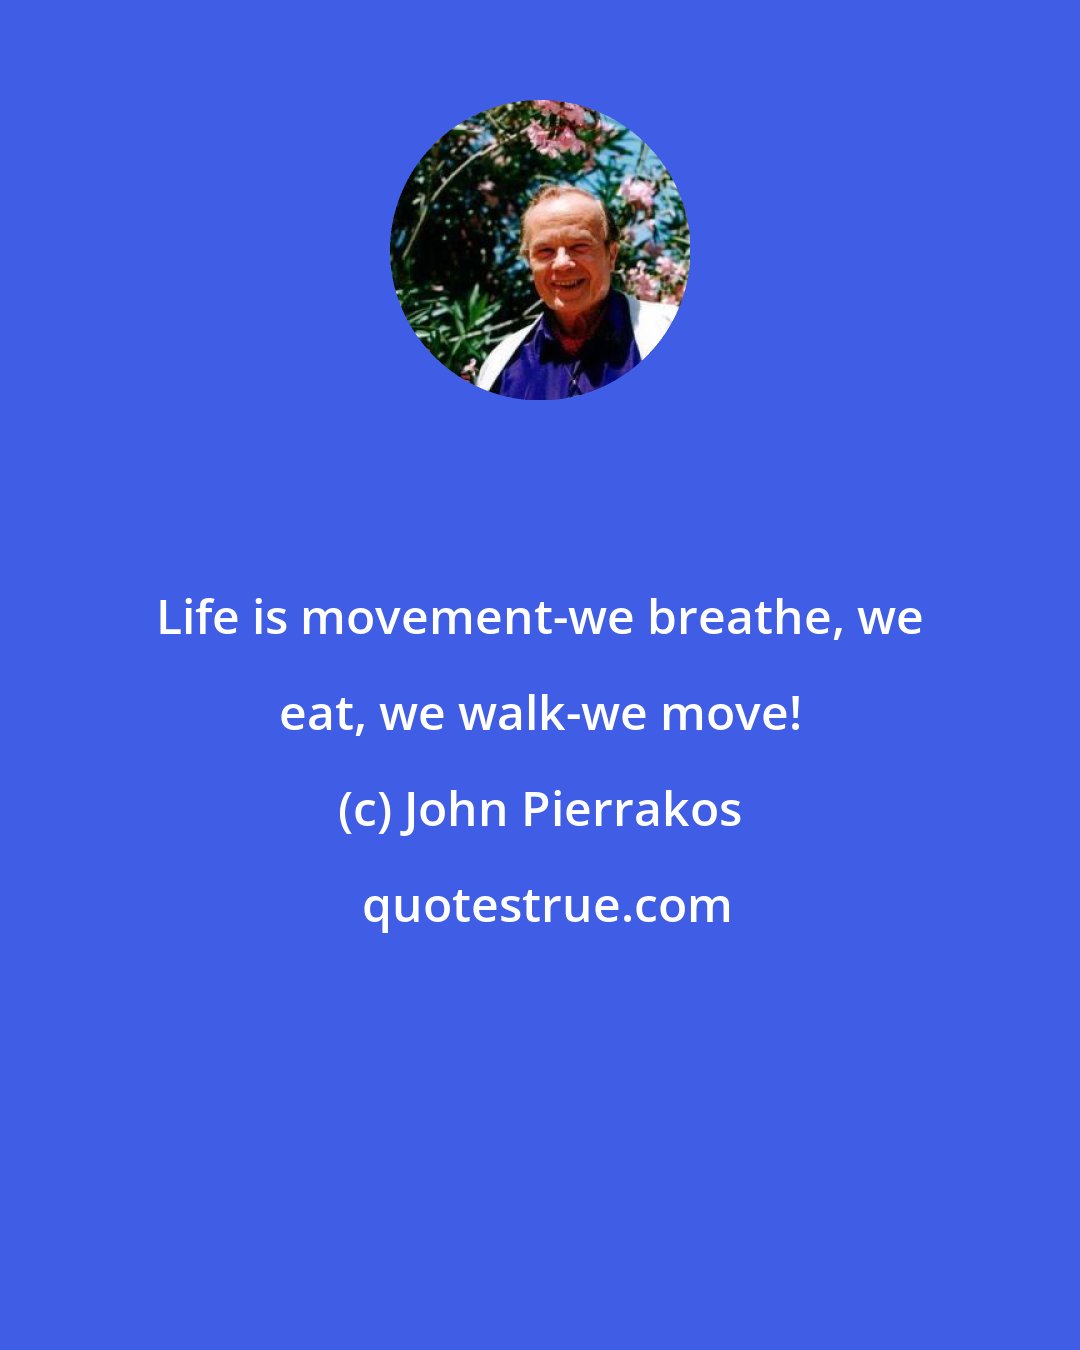 John Pierrakos: Life is movement-we breathe, we eat, we walk-we move!